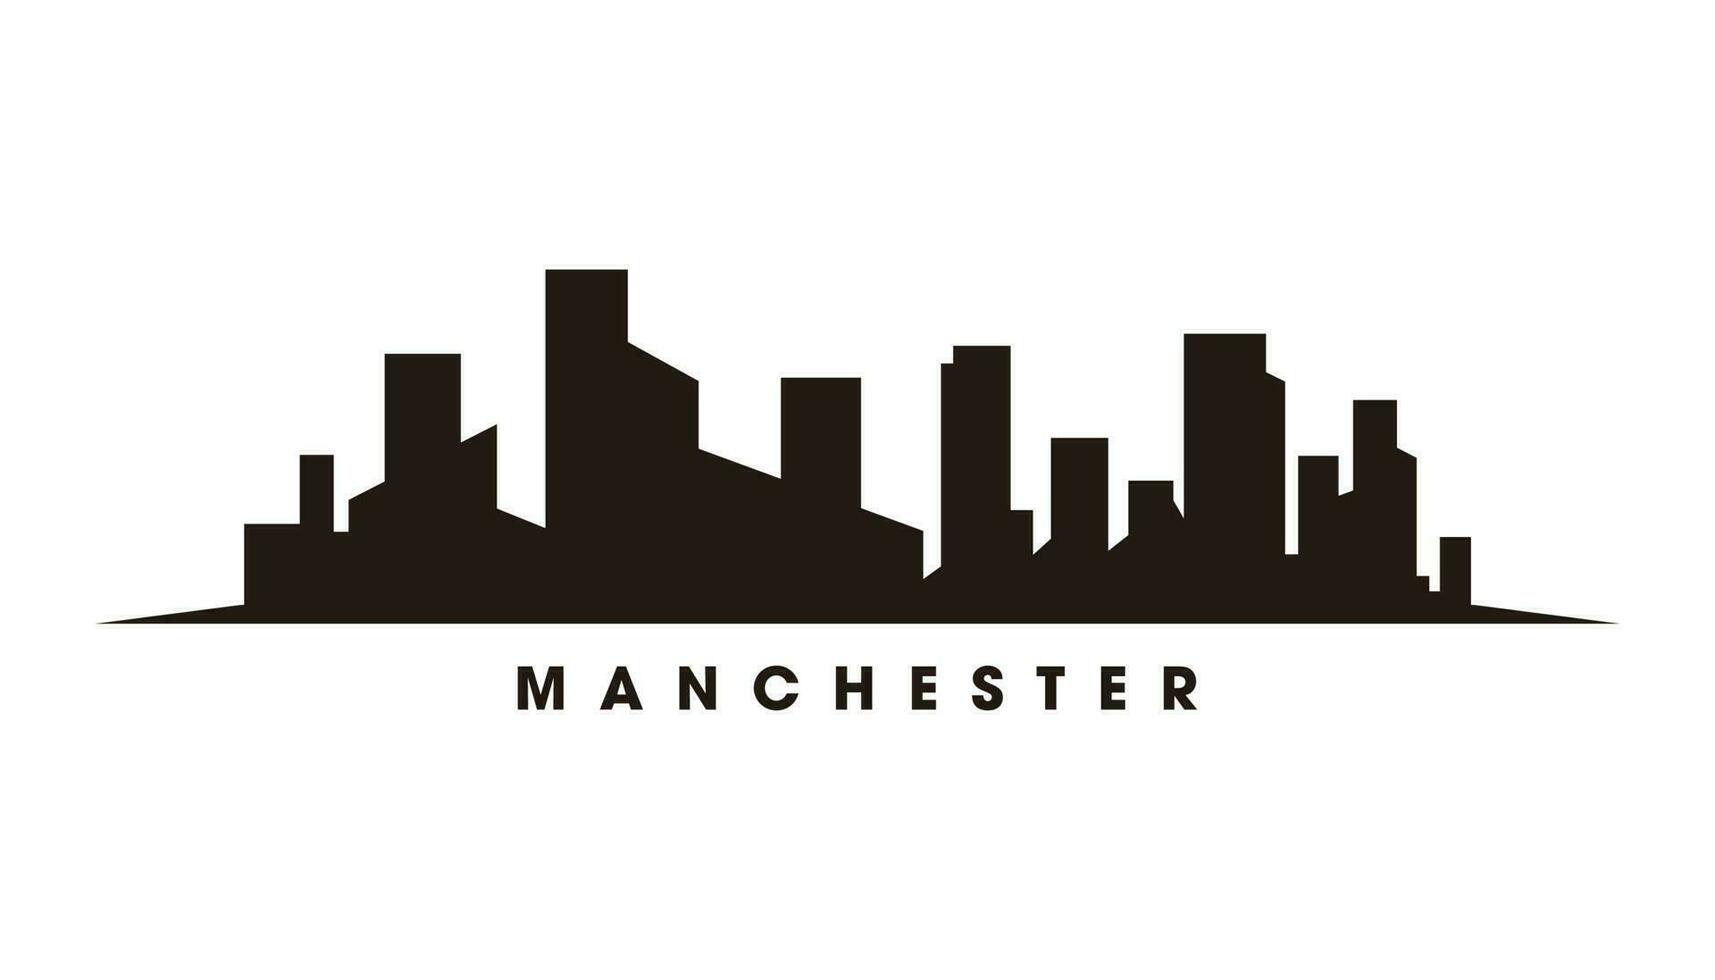 Manchester skyline and landmarks silhouette vector